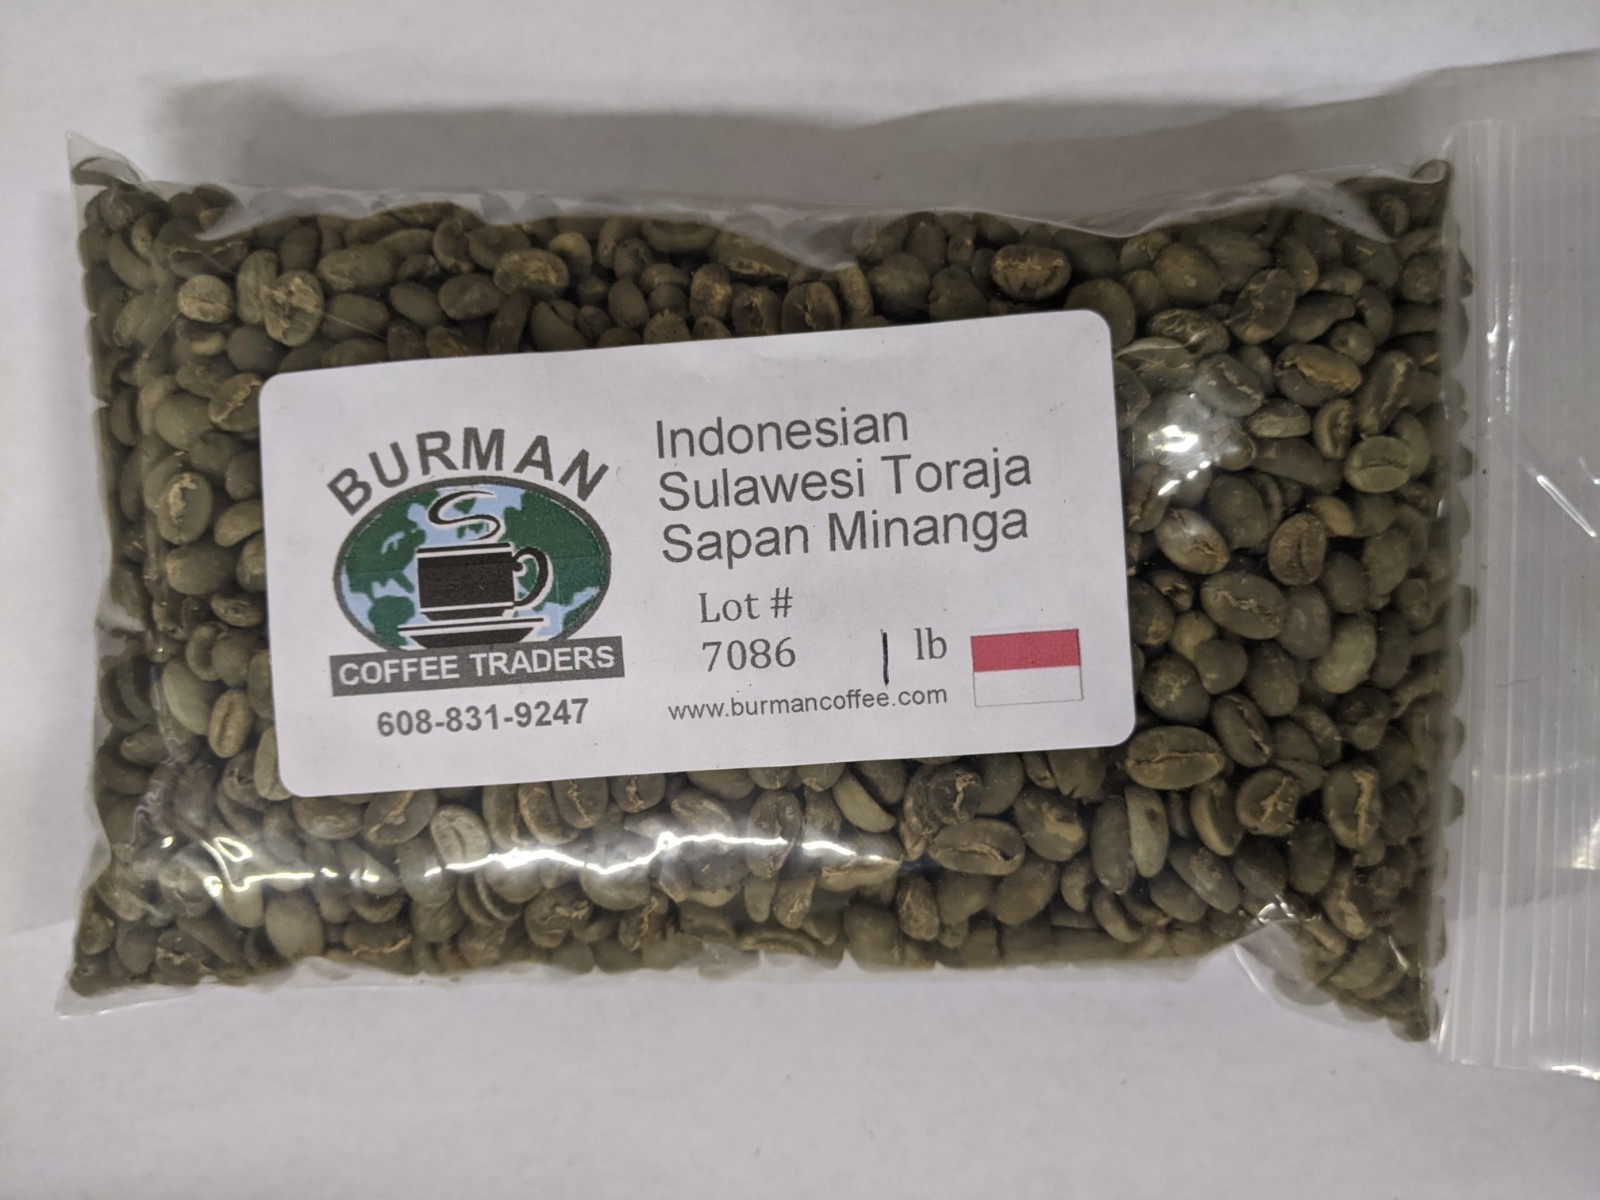 Indonesian Sulawesi Toraja Sapan Minanga coffee beans